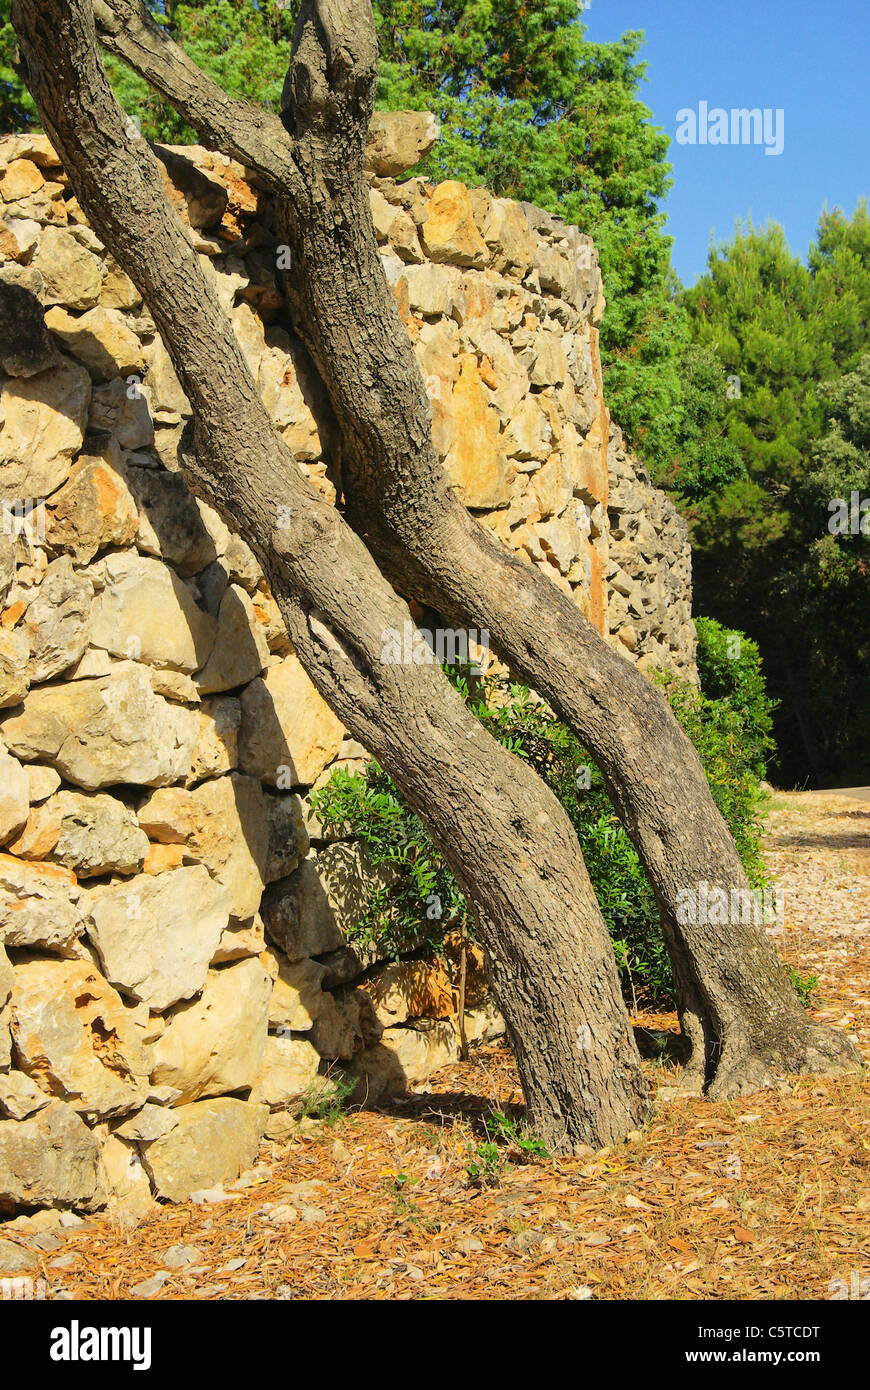 Olivenbaum an Mauer - olive tree on wall 01 Stock Photo